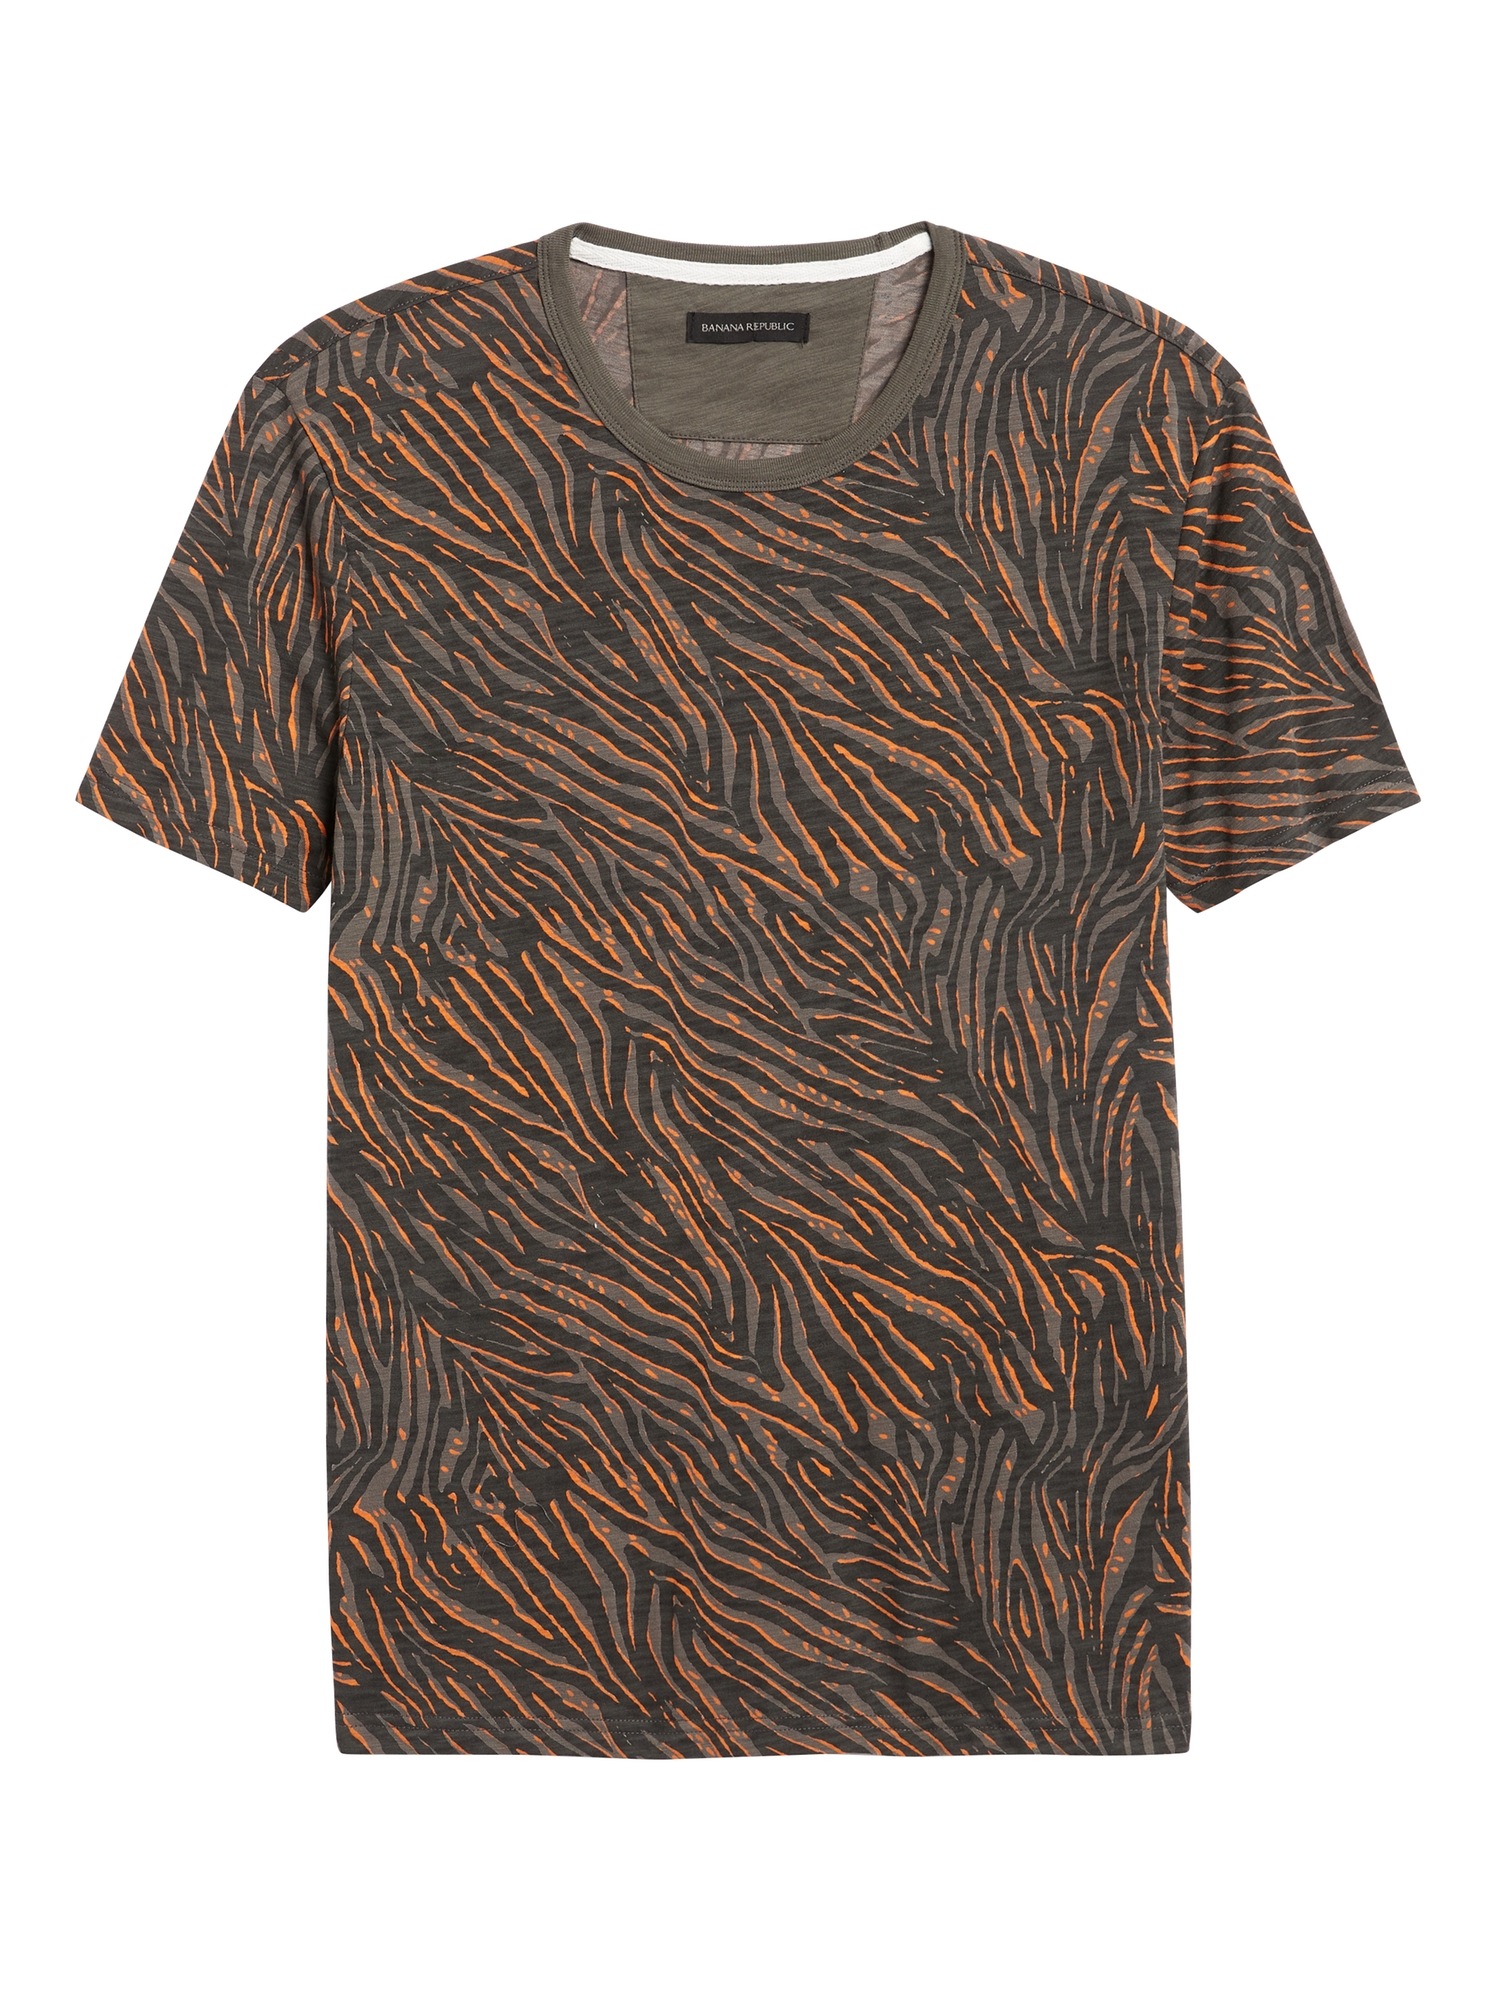 Zebra Graphic T-Shirt